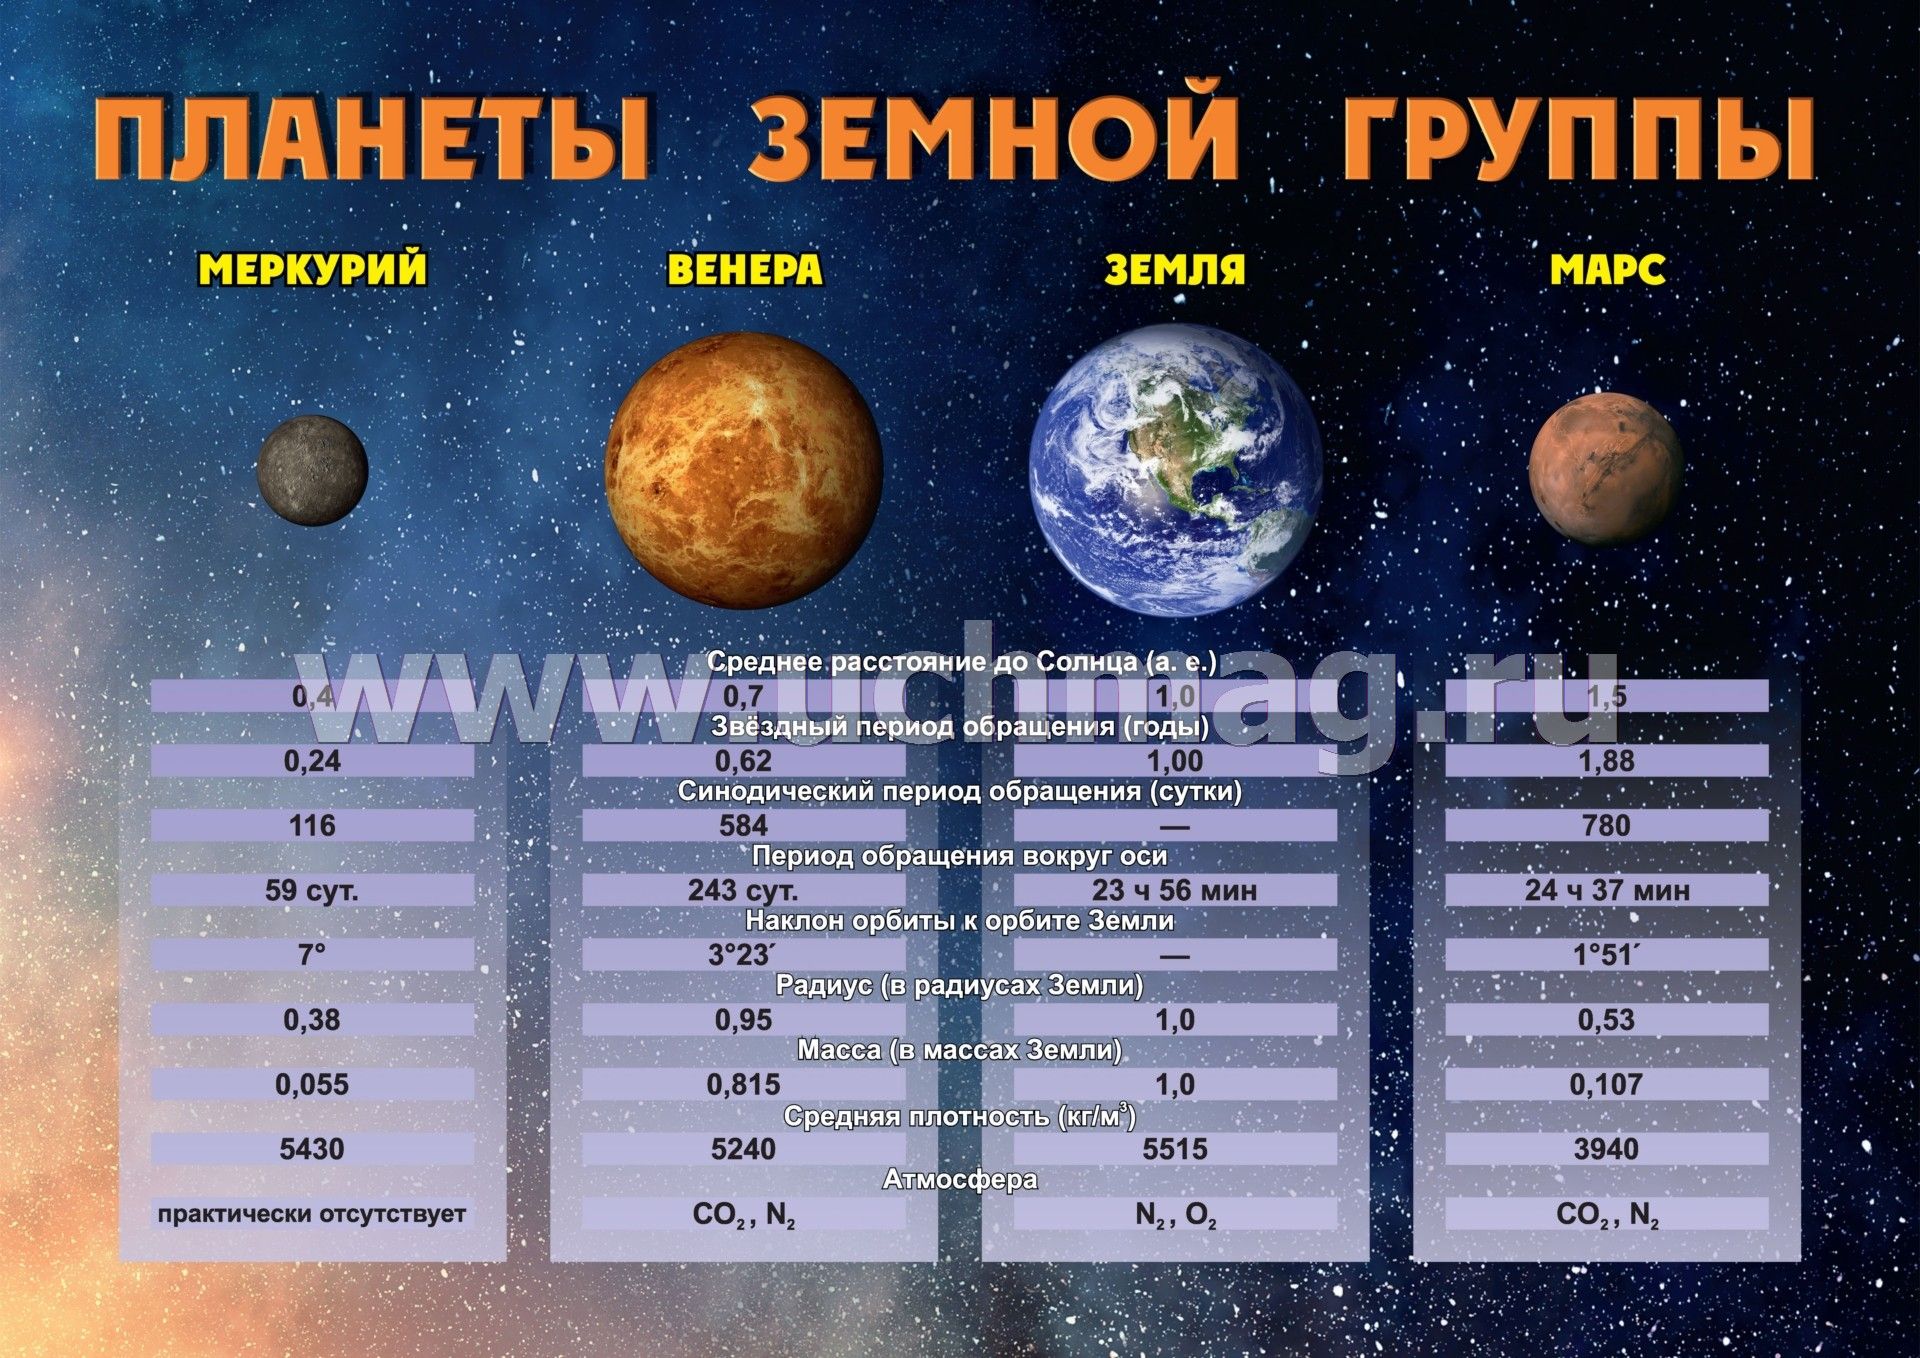 Размеры земной группы. Таблица планет земной группы. Размеры планет земной группы. Характеристика планет земной группы. Масса планет земной группы таблица.